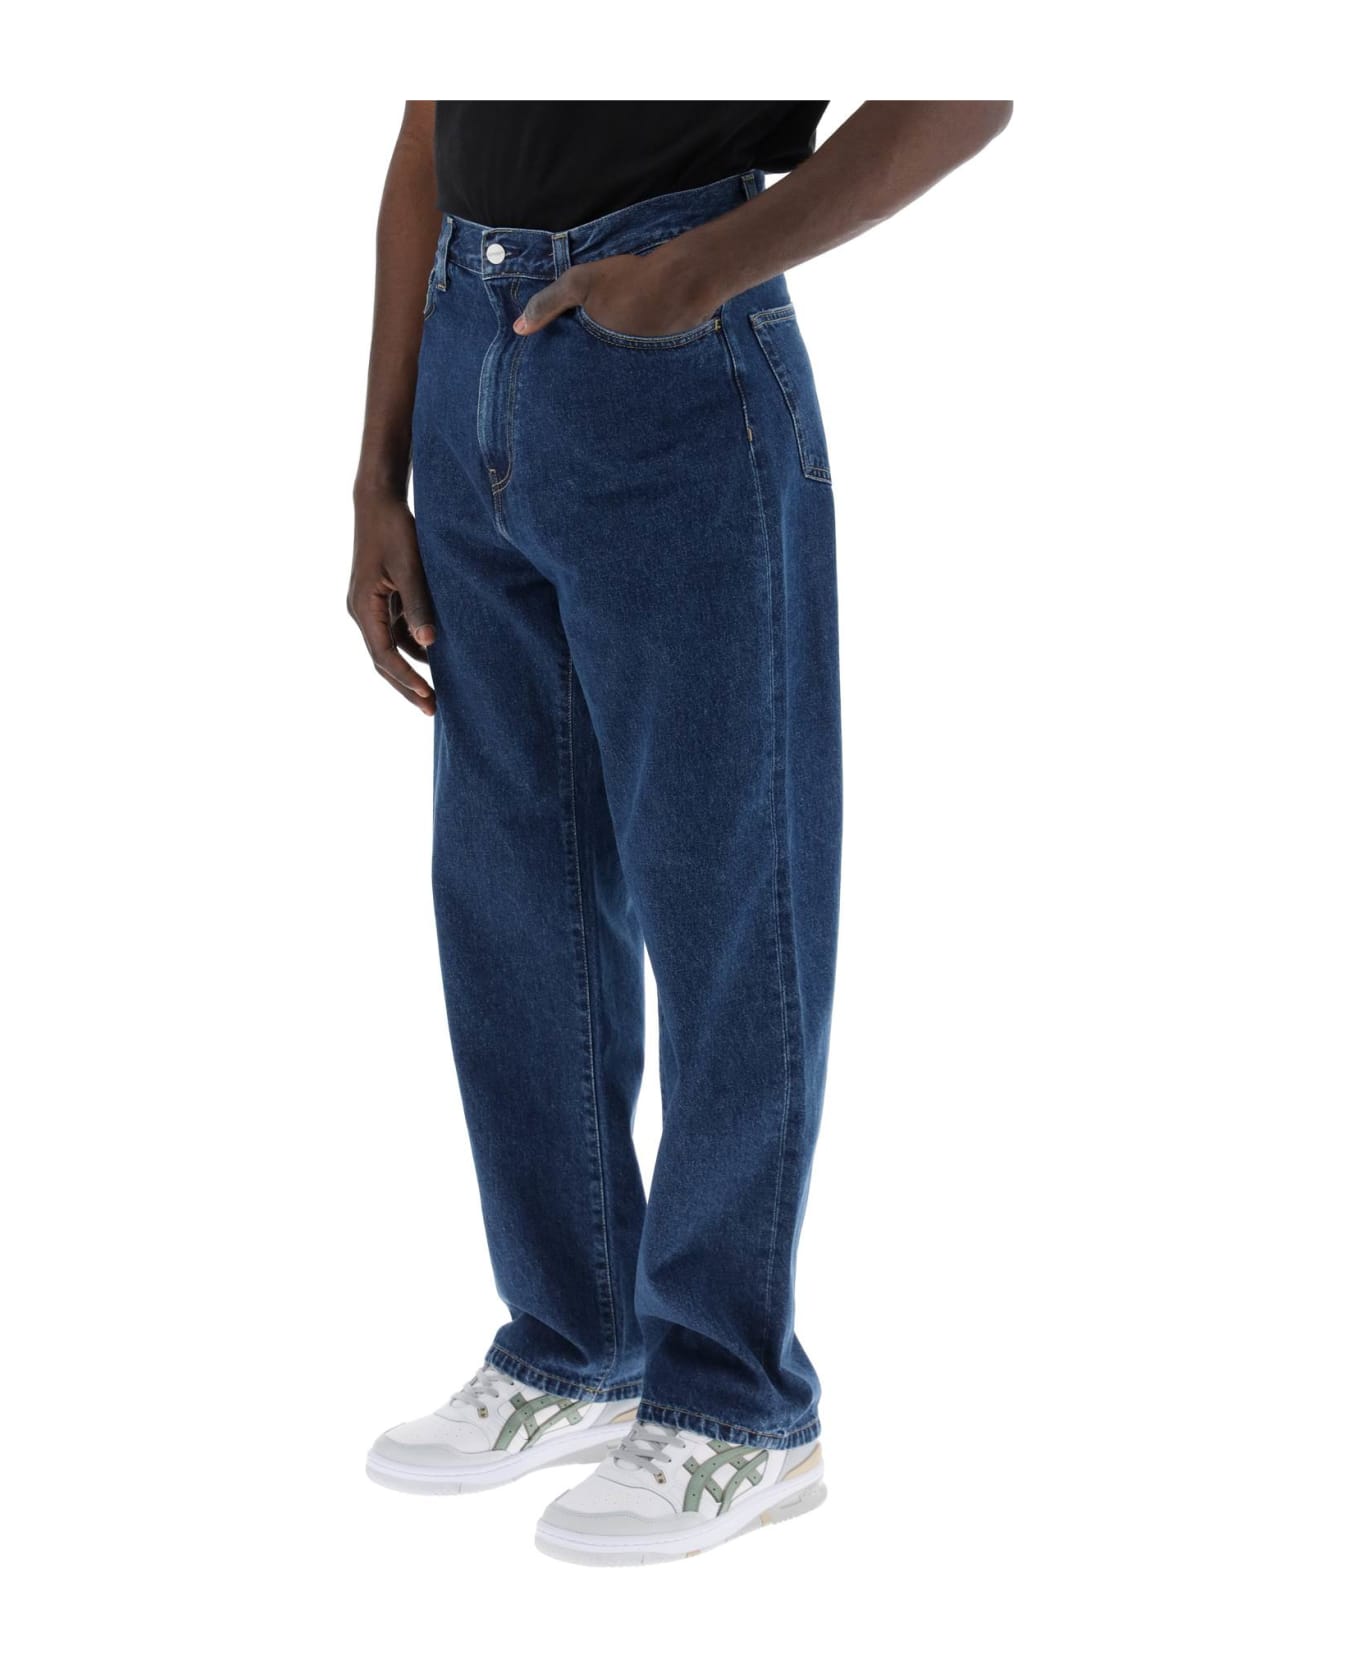 Carhartt Landon Loose Fit Jeans - BLUE (Blue)